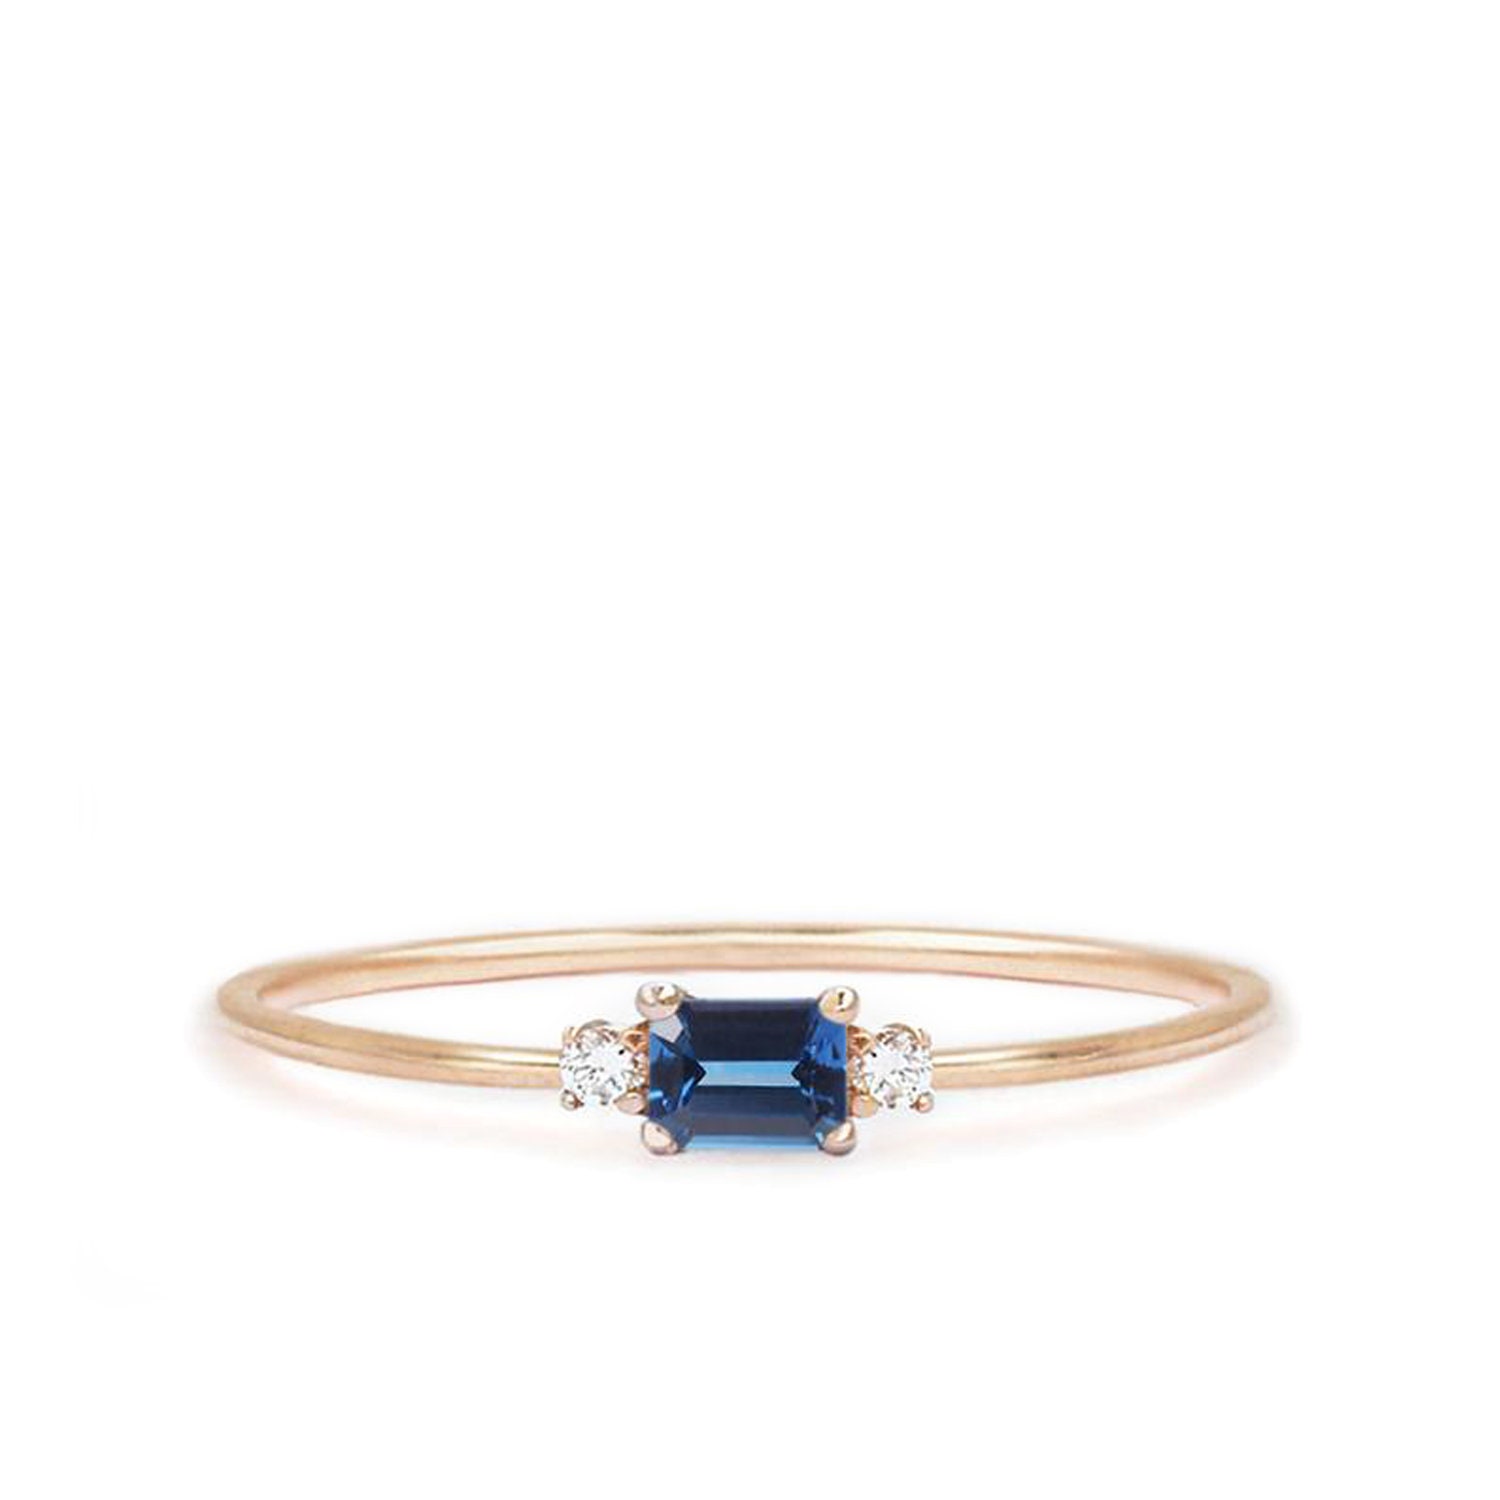 Blue sapphire ring baguette engagement ring for women gold | Etsy